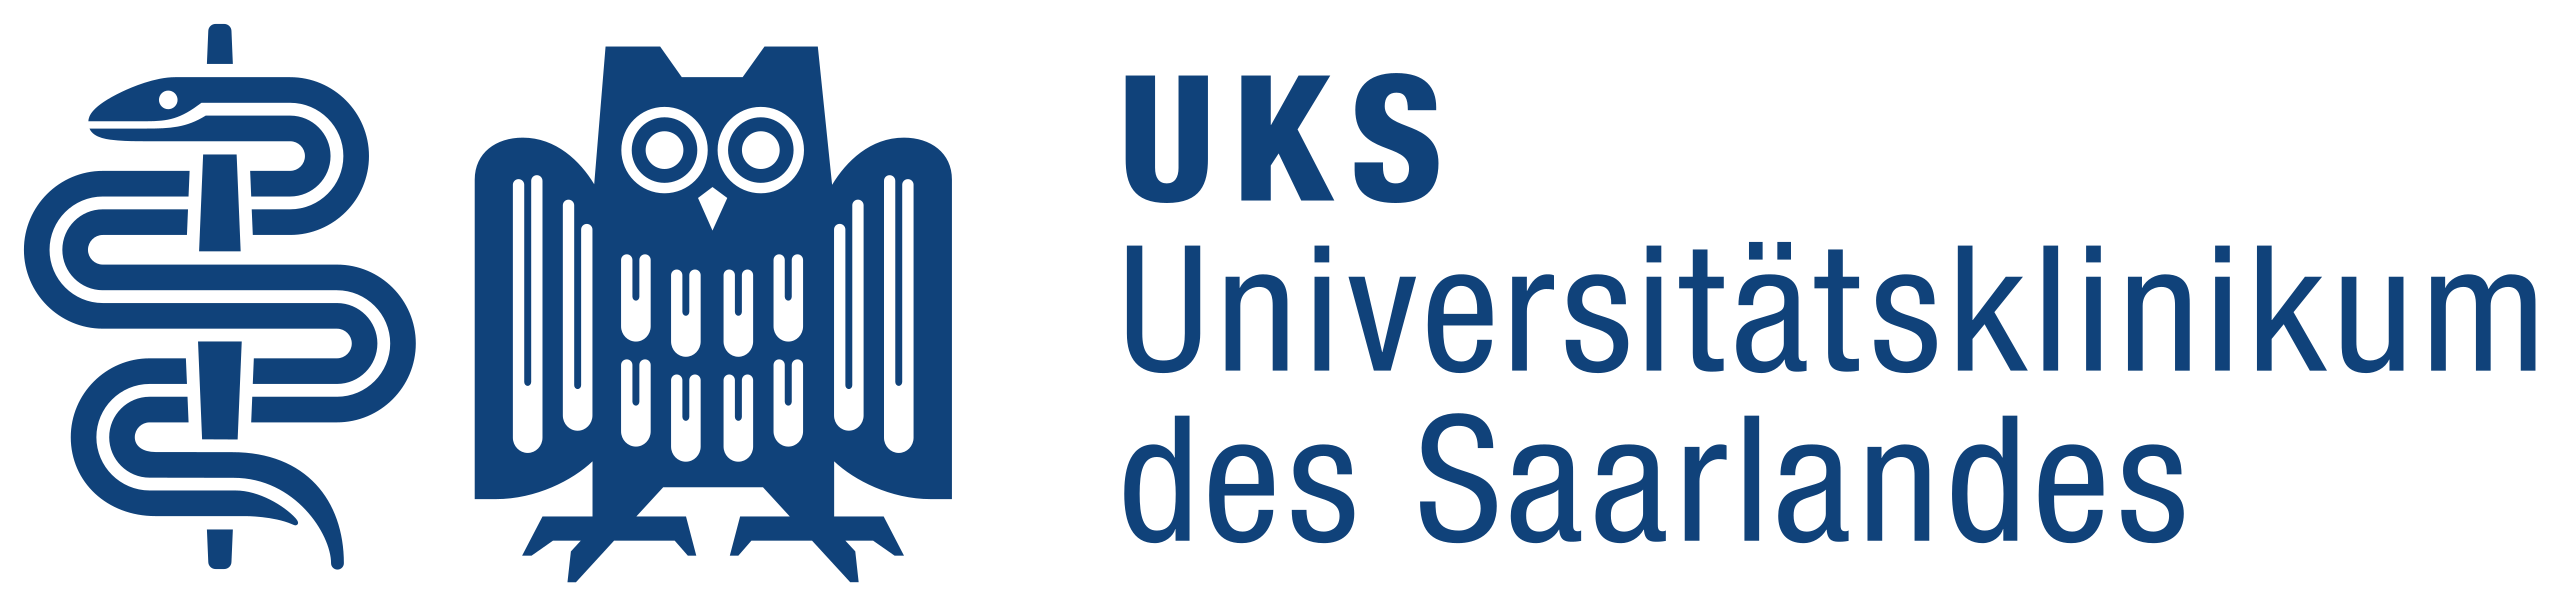 UKS Universitätsklinikum des Saarlandes